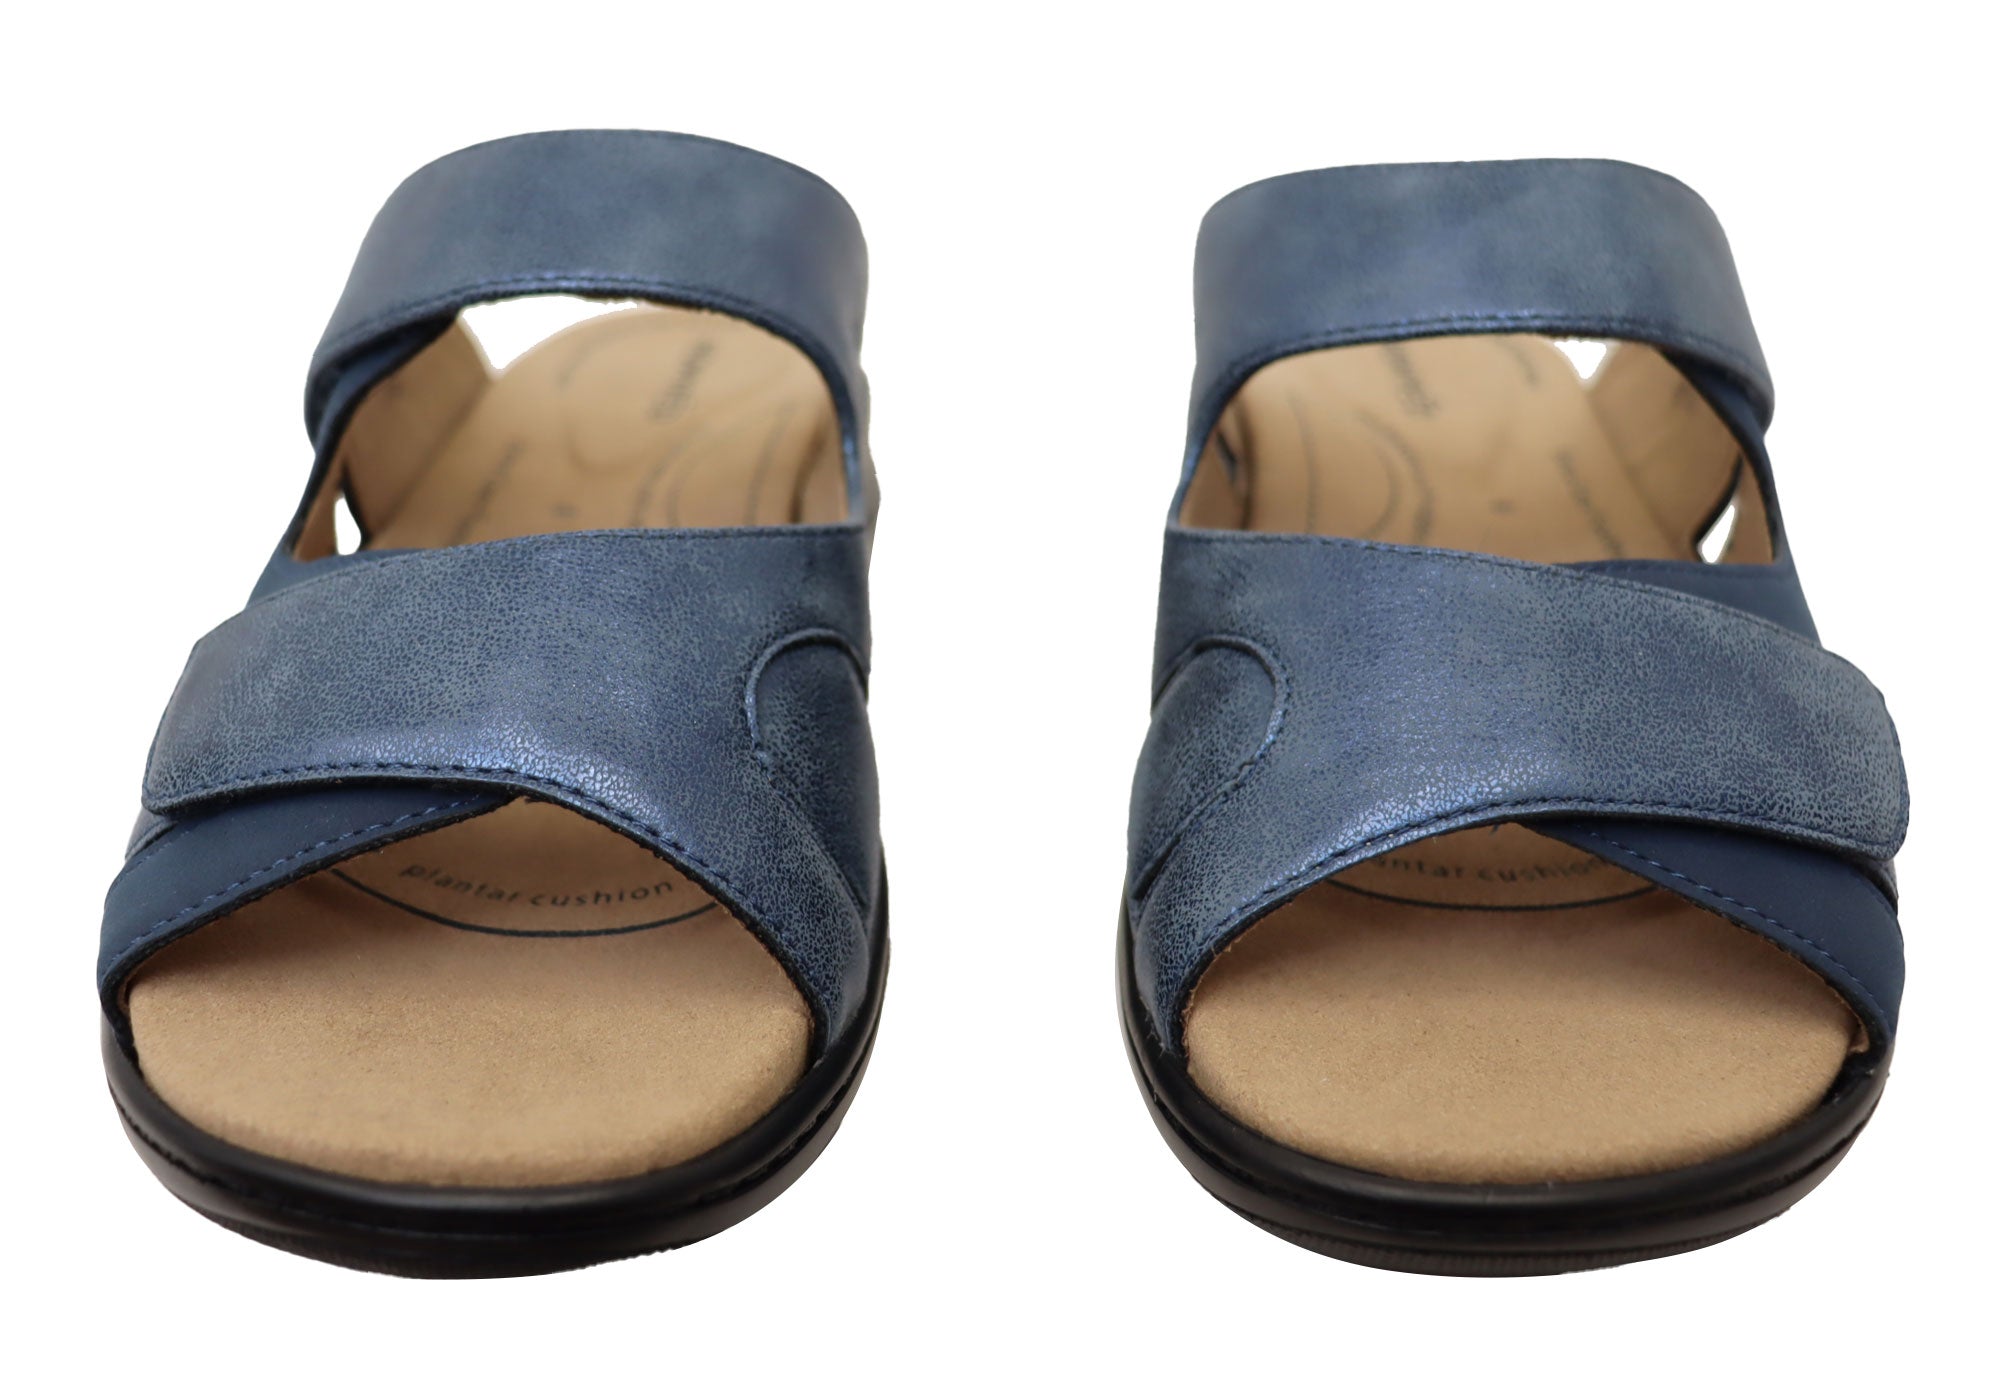 Homyped Womens Dream Slide Comfortable Wide Width Slides Sandals